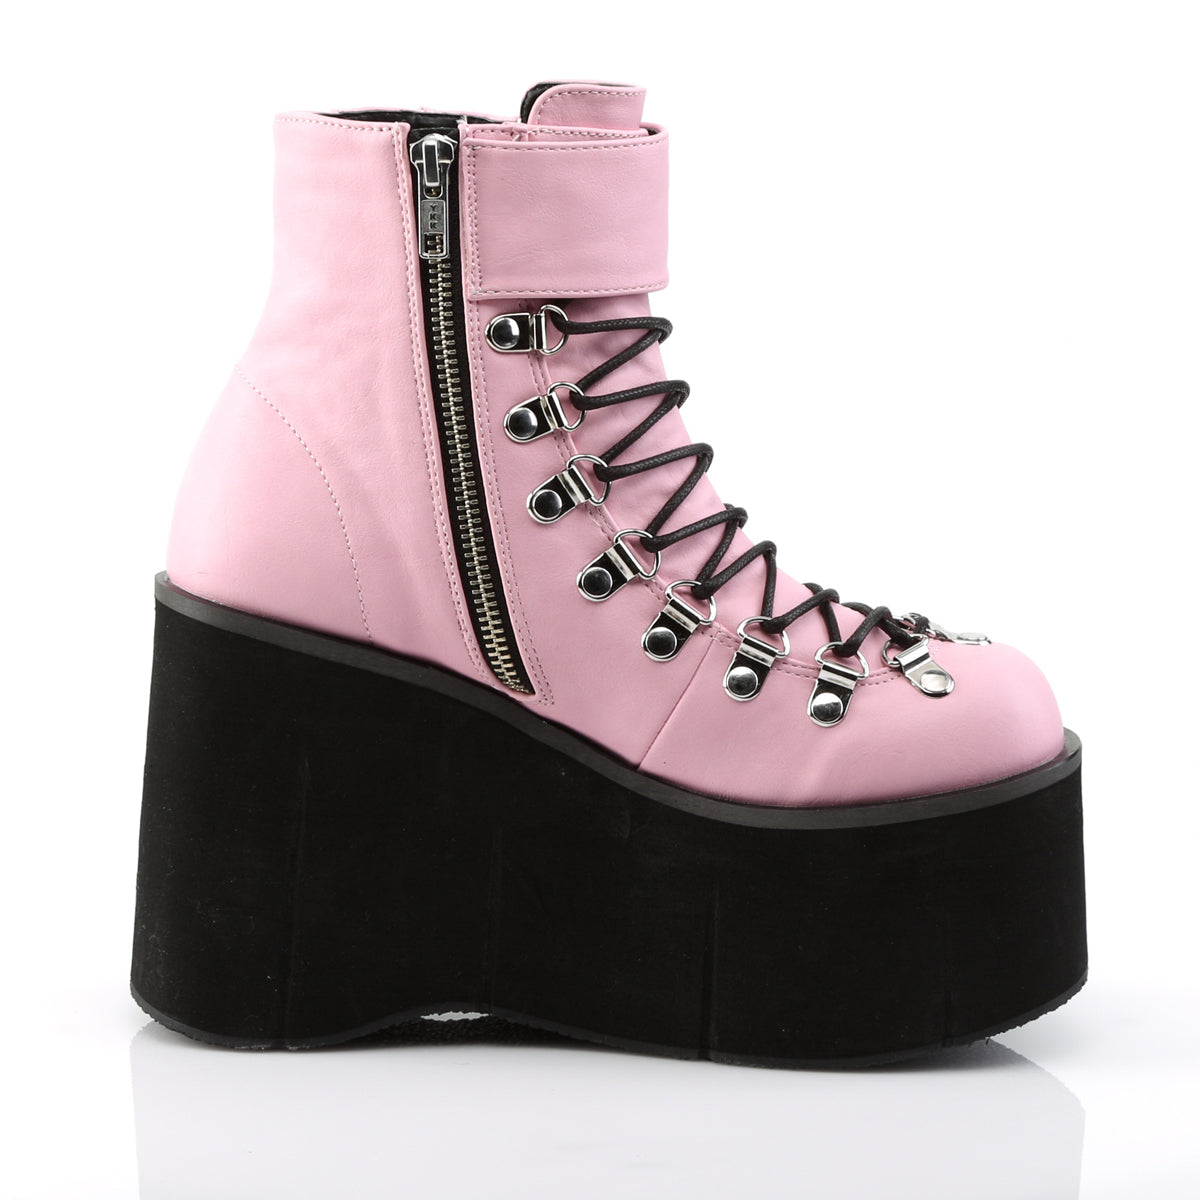 KERA-21 Demonia B Pink Vegan Leather Women's Ankle Boots [Demonia Cult Alternative Footwear]